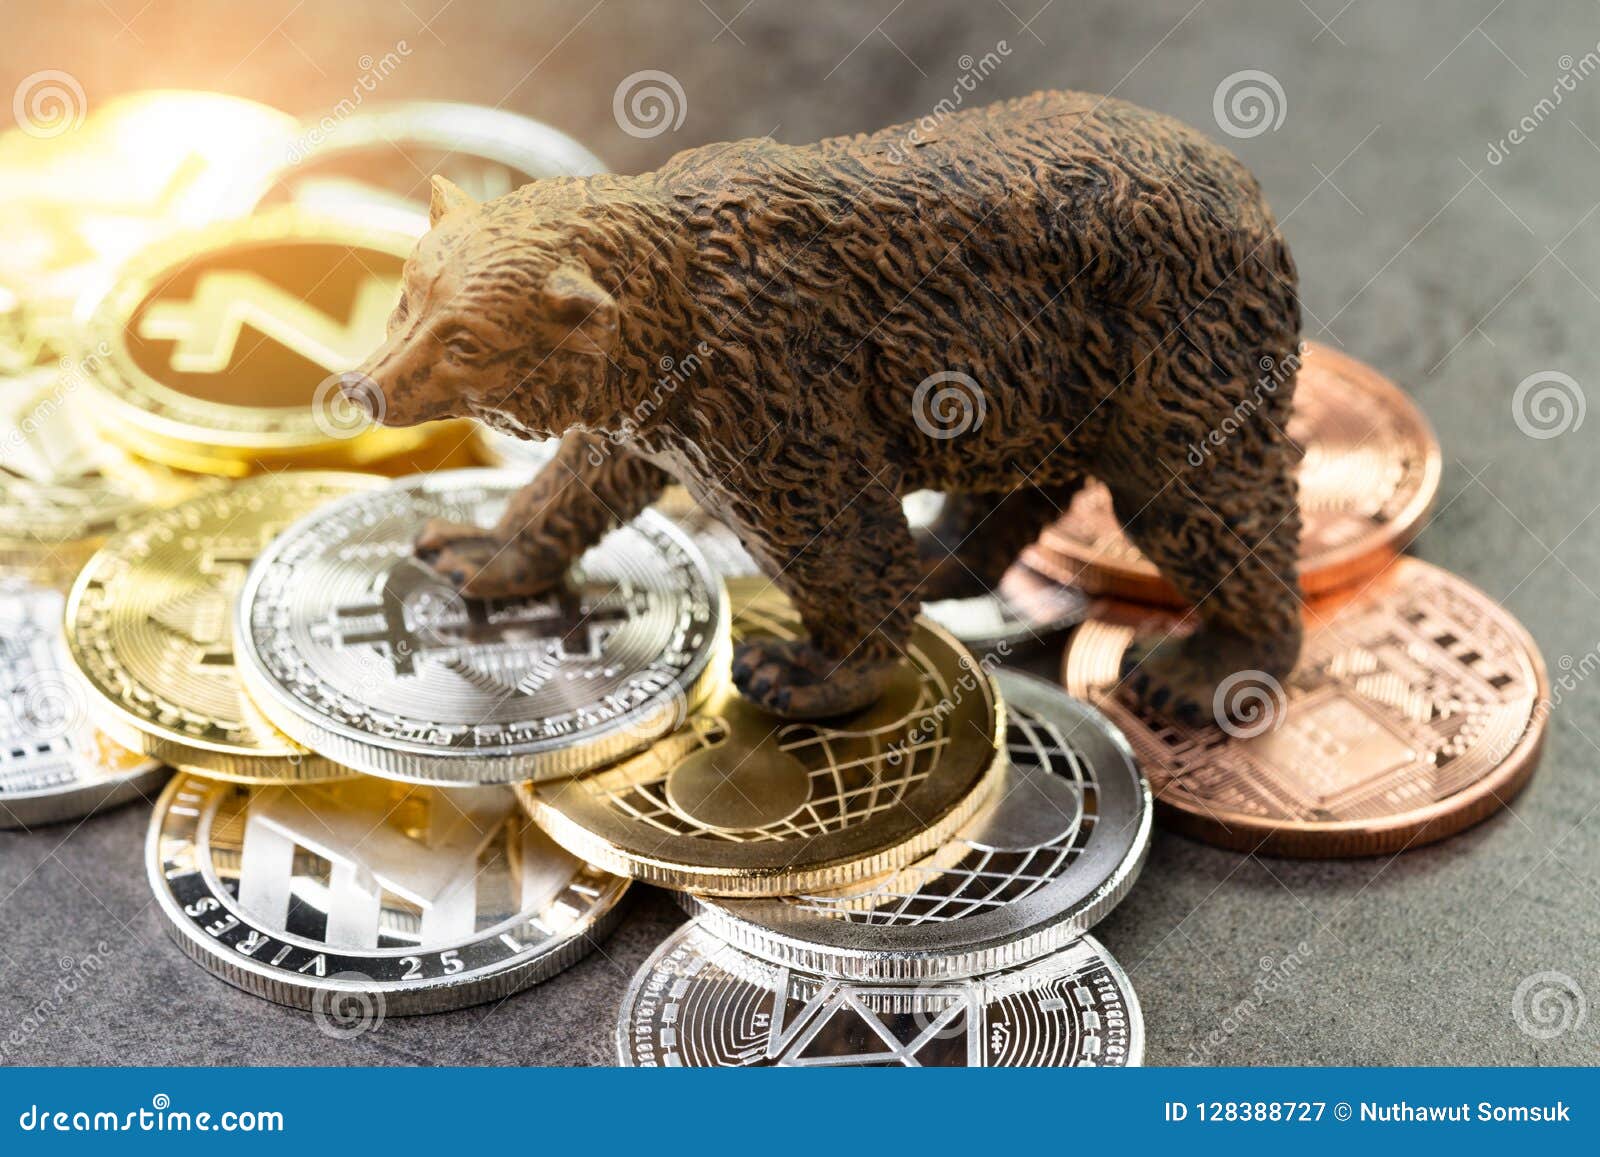 is crypto in bear market